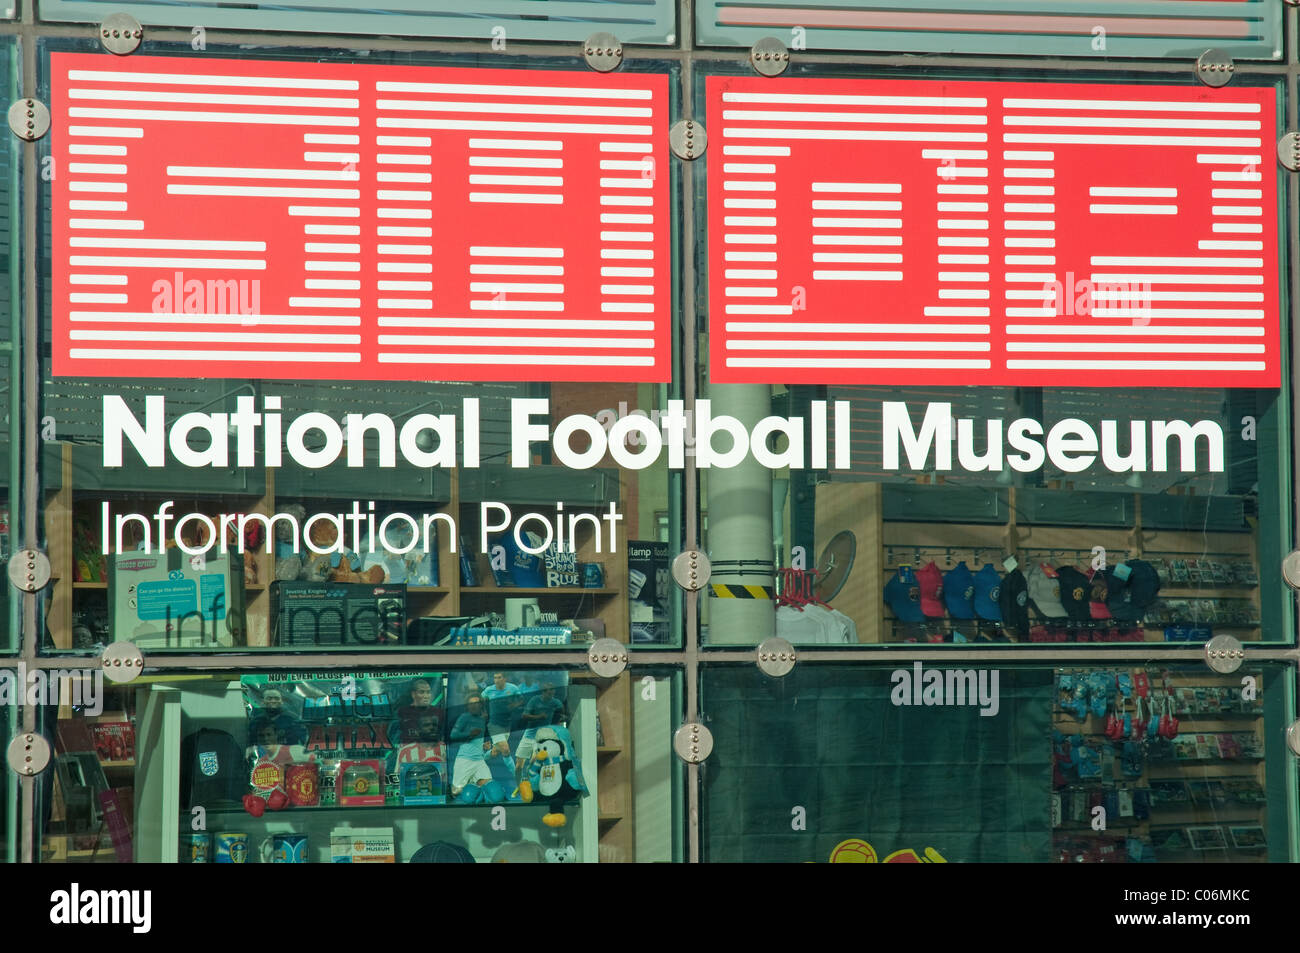 National Football Museum Shop, Urbis building,Manchester.The National Football Museum liegt offen Herbst 2011. Stockfoto